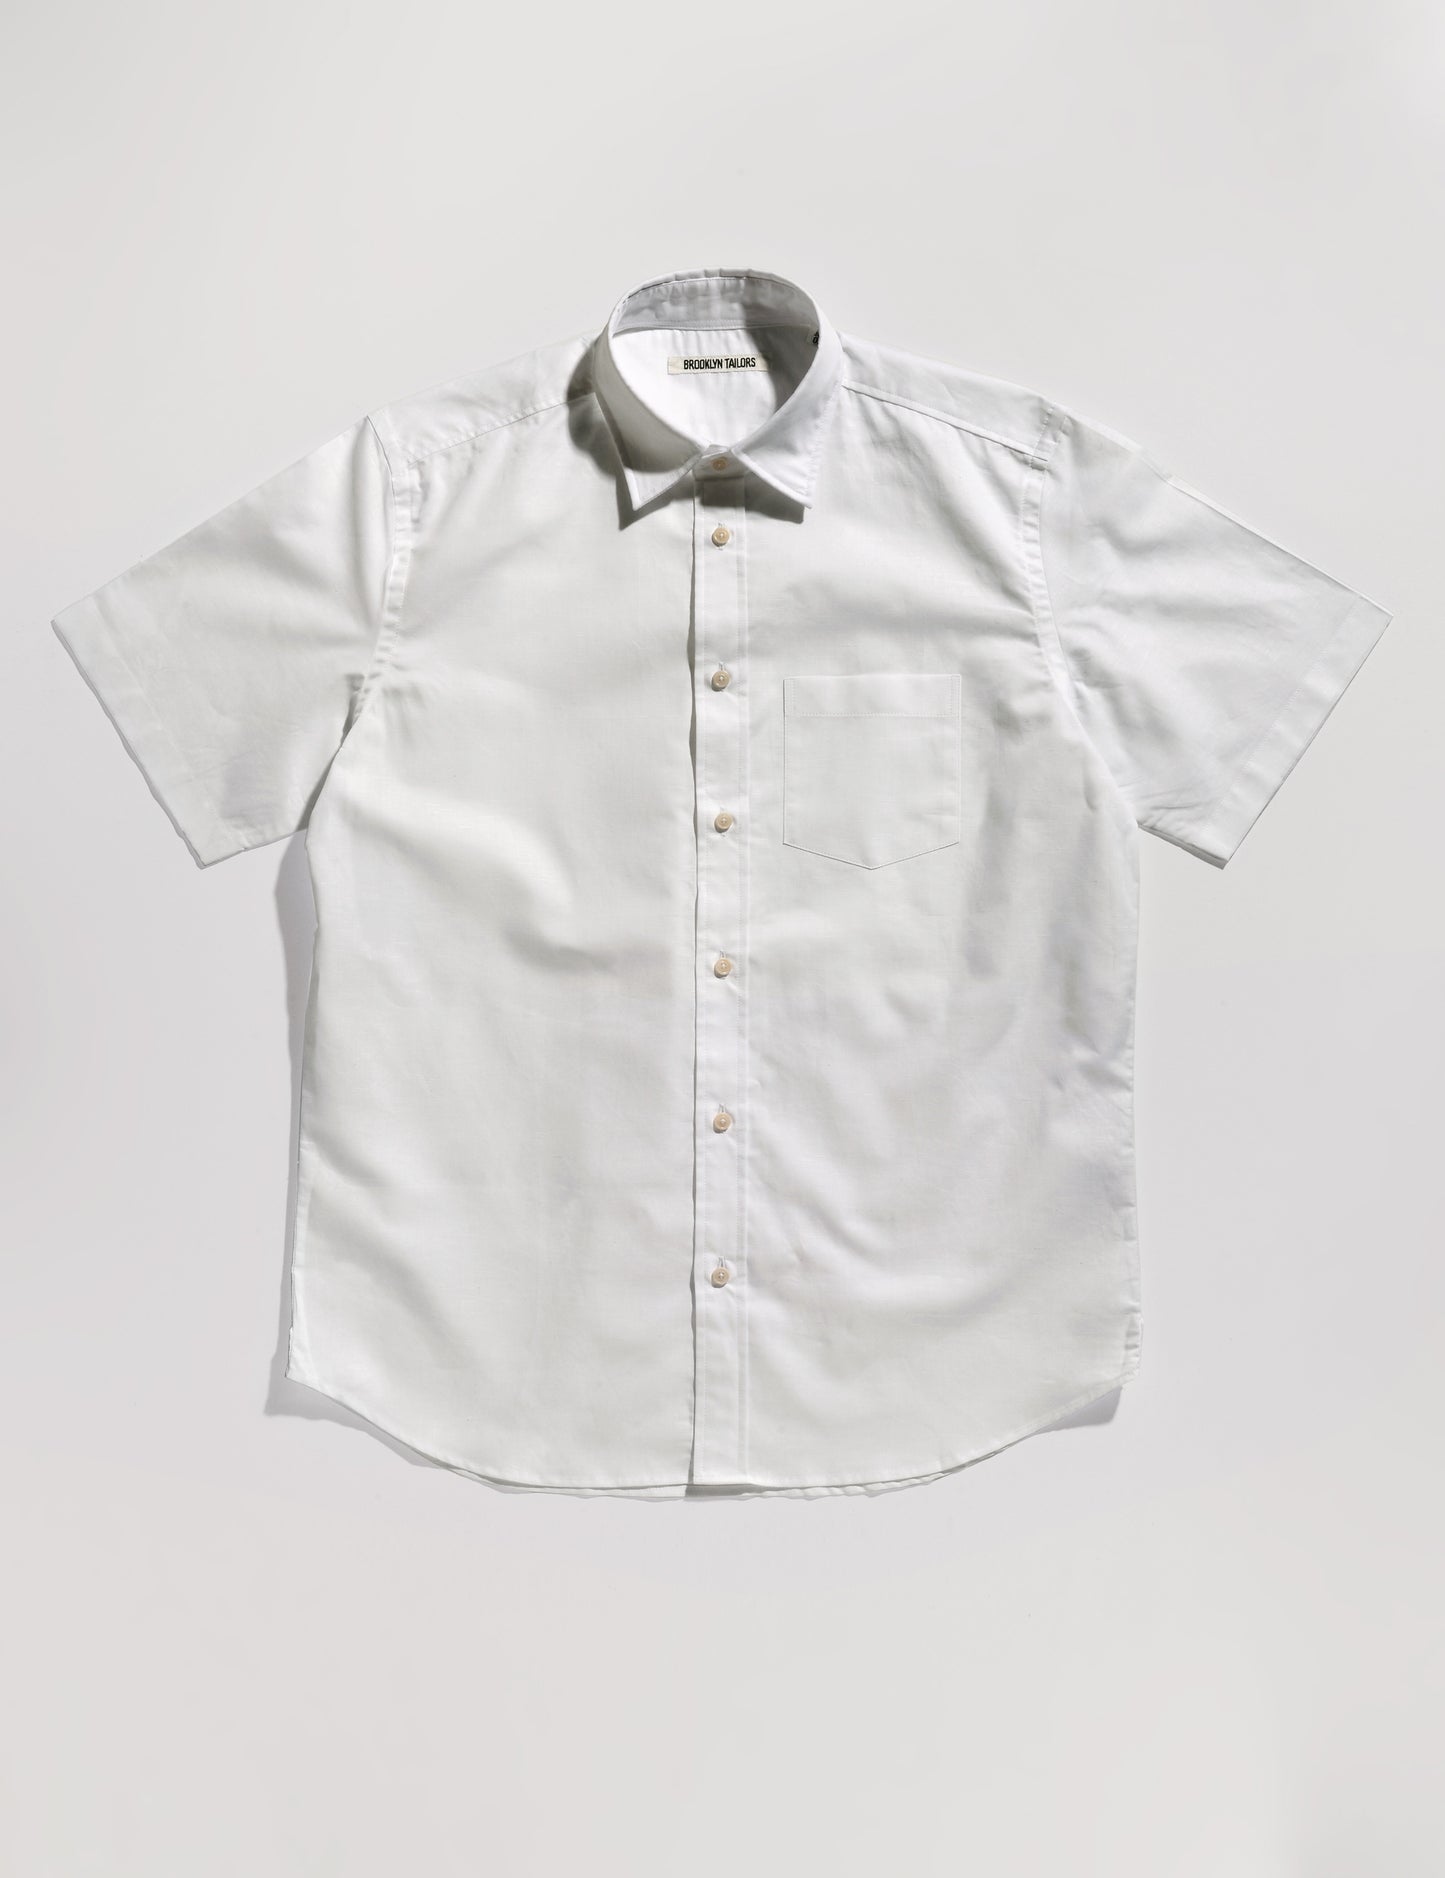 BKT14 Casual Shirt in Cotton / Linen - White